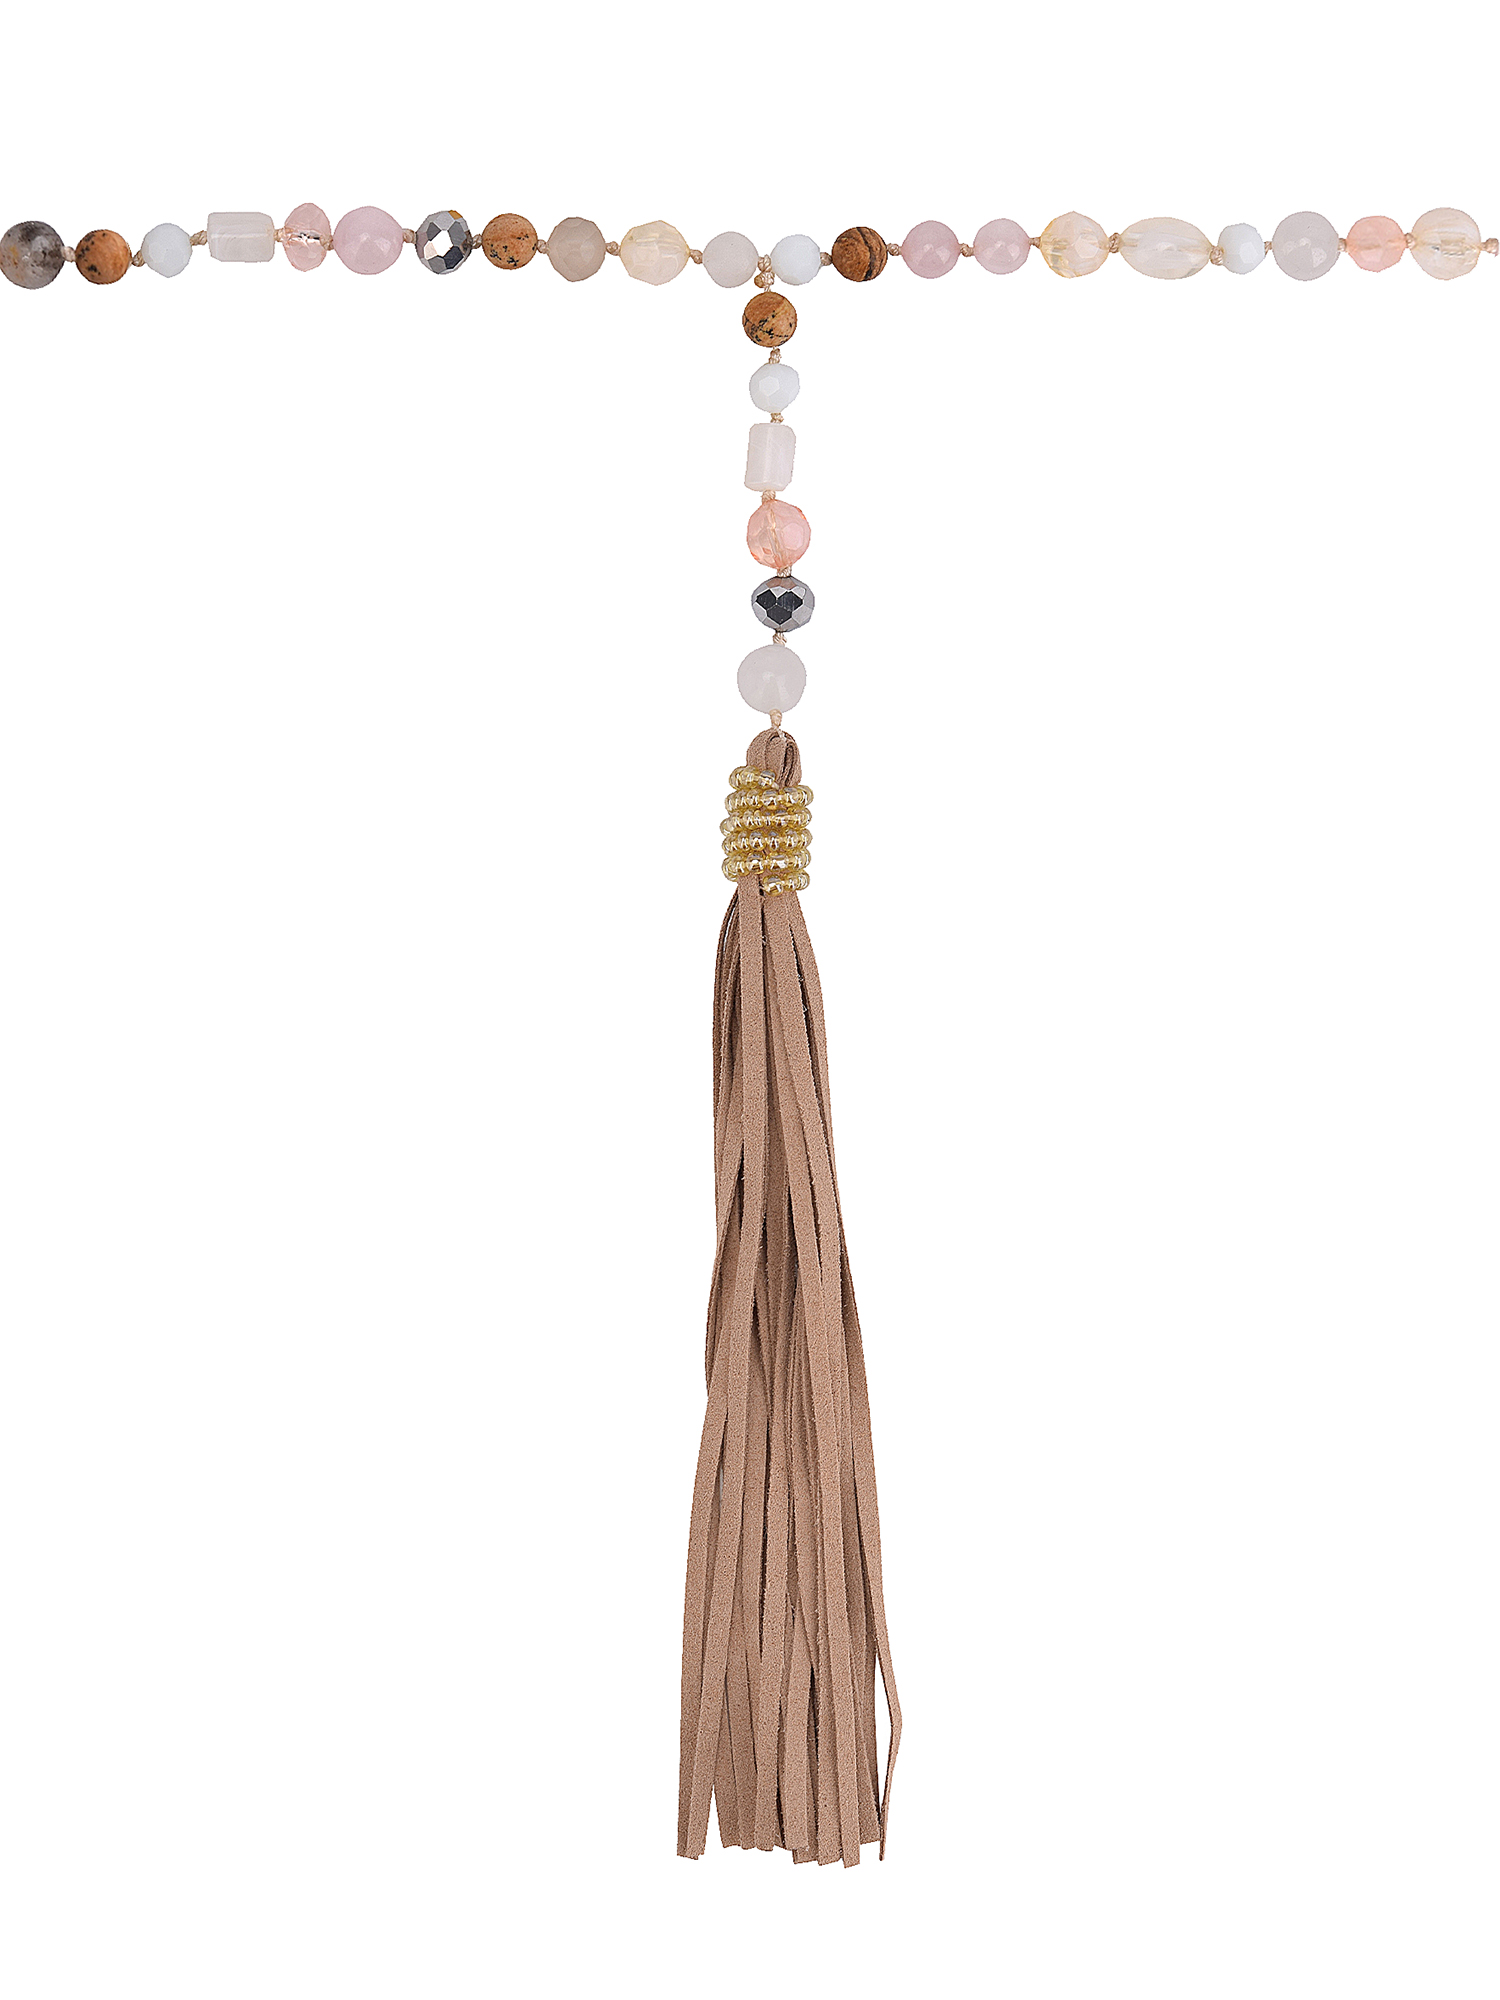 The Pioneer Woman - Women's Jewelry, Multi-Bead Tassel Y-Necklace - image 3 of 5